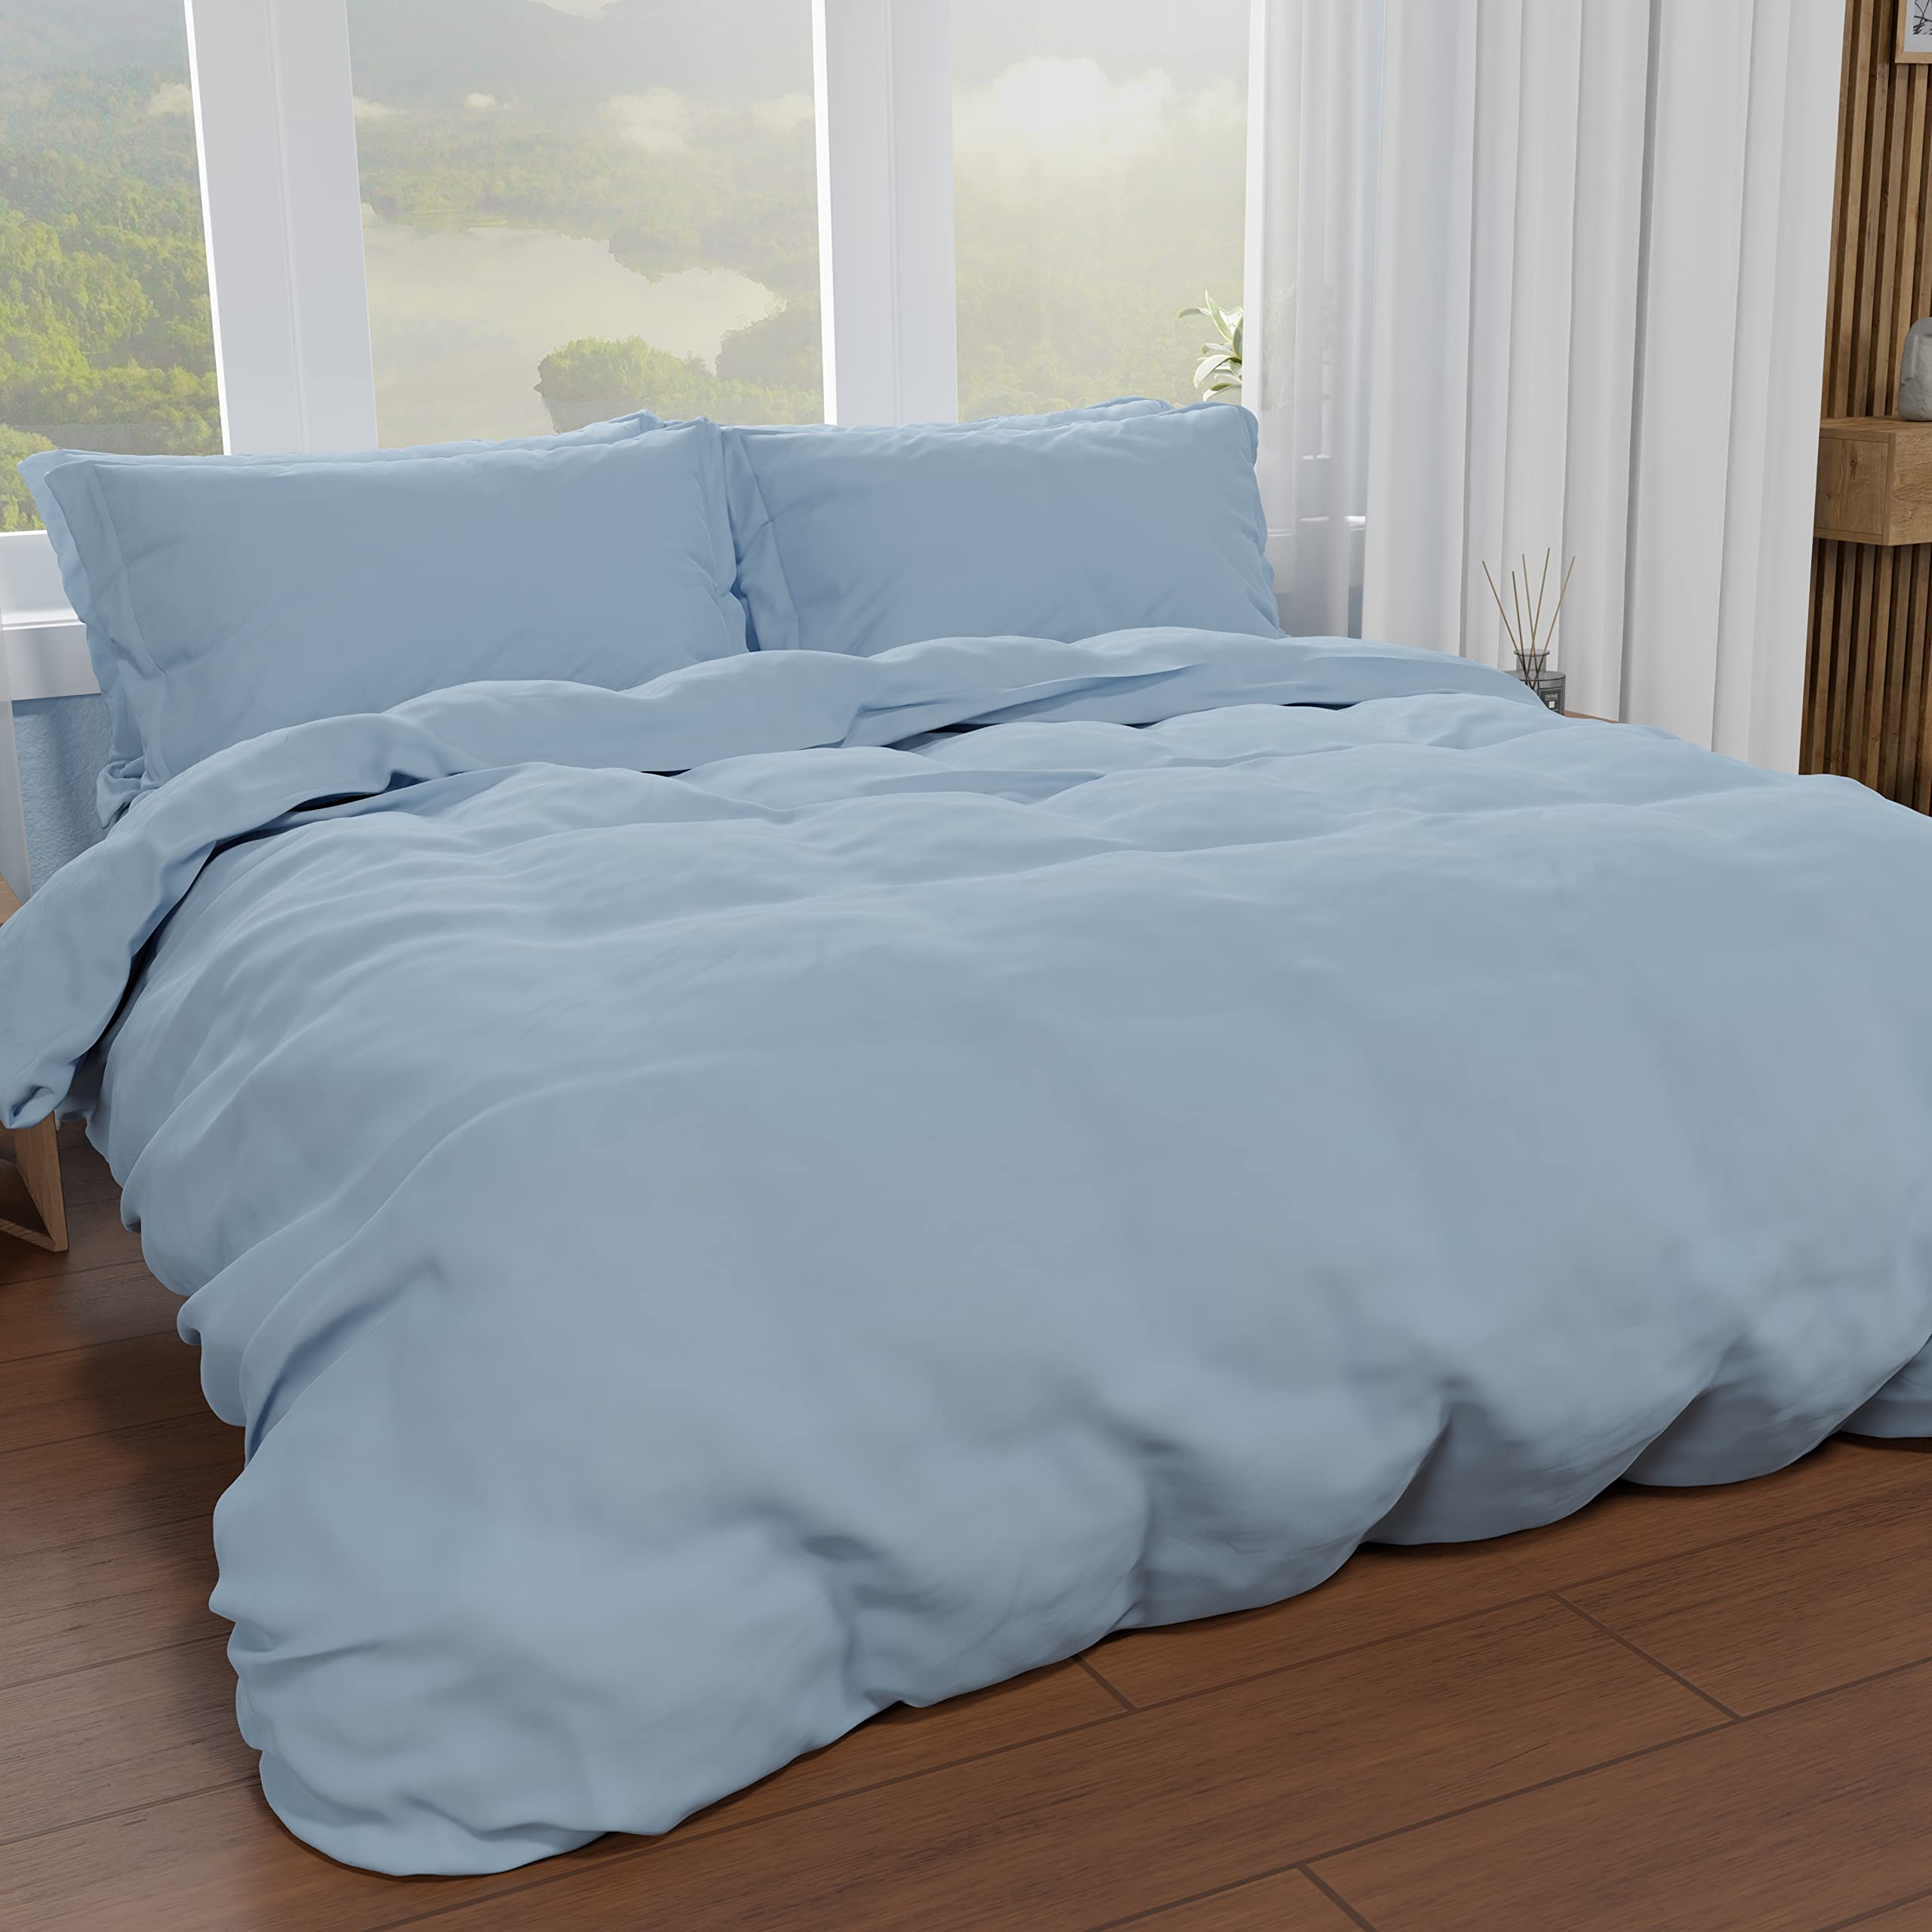 PETTI Artigiani Italiani - Bettbezug für Doppelbett, Bettbezug und Kissenbezüge aus Mikrofaser, einfarbig, Hellblau, 100% Made in Italy